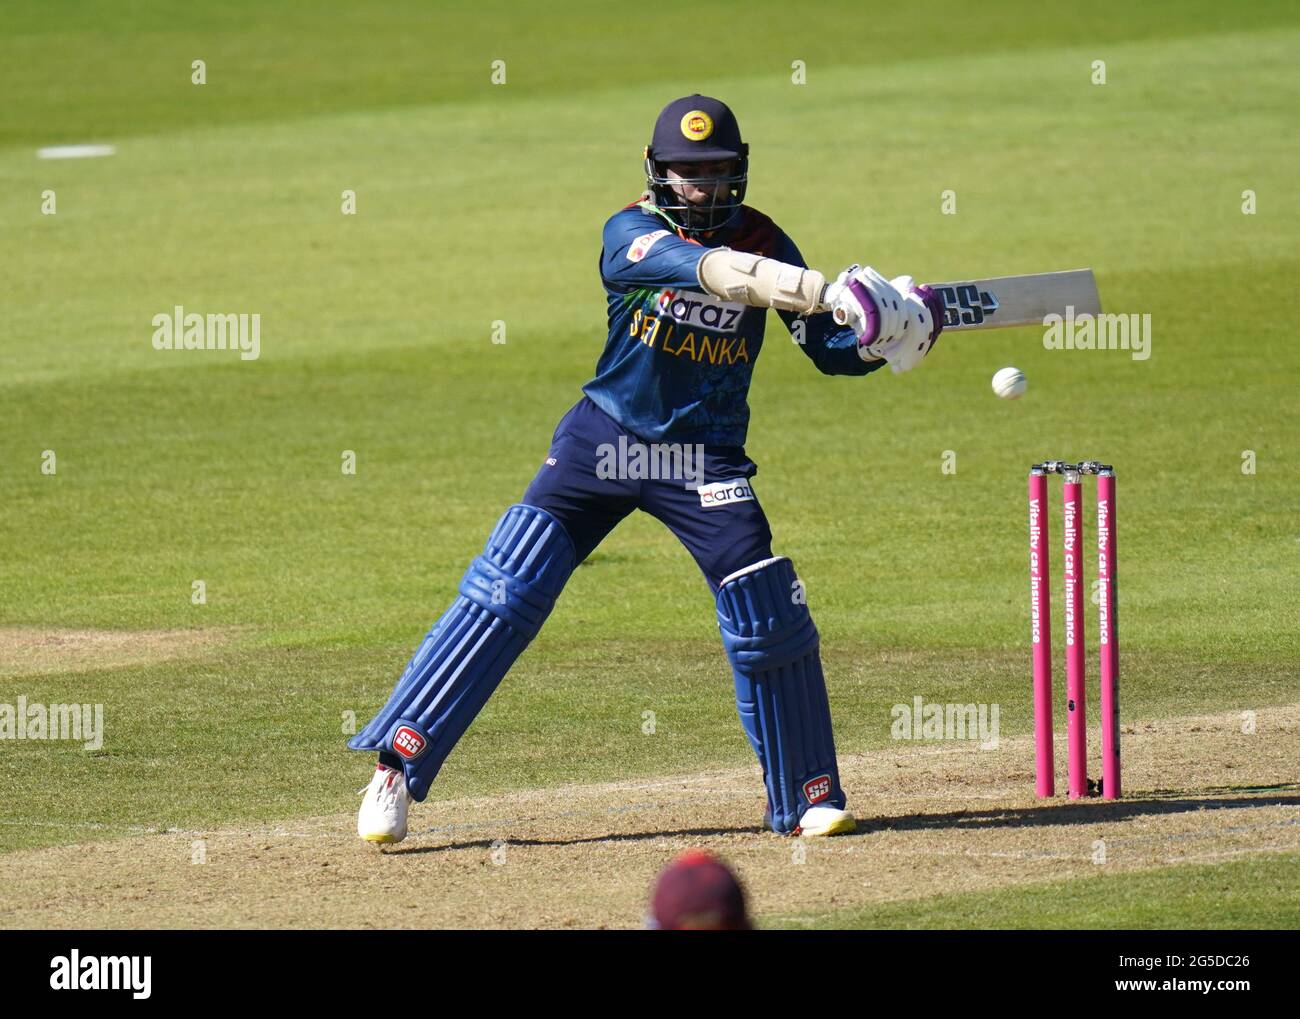 Sri Lanka's Niroshan Dickwella in action during the Twenty20 International match at The Ageas Bowl, Southampton. Picture date: Saturday June 26, 2021. Stock Photo